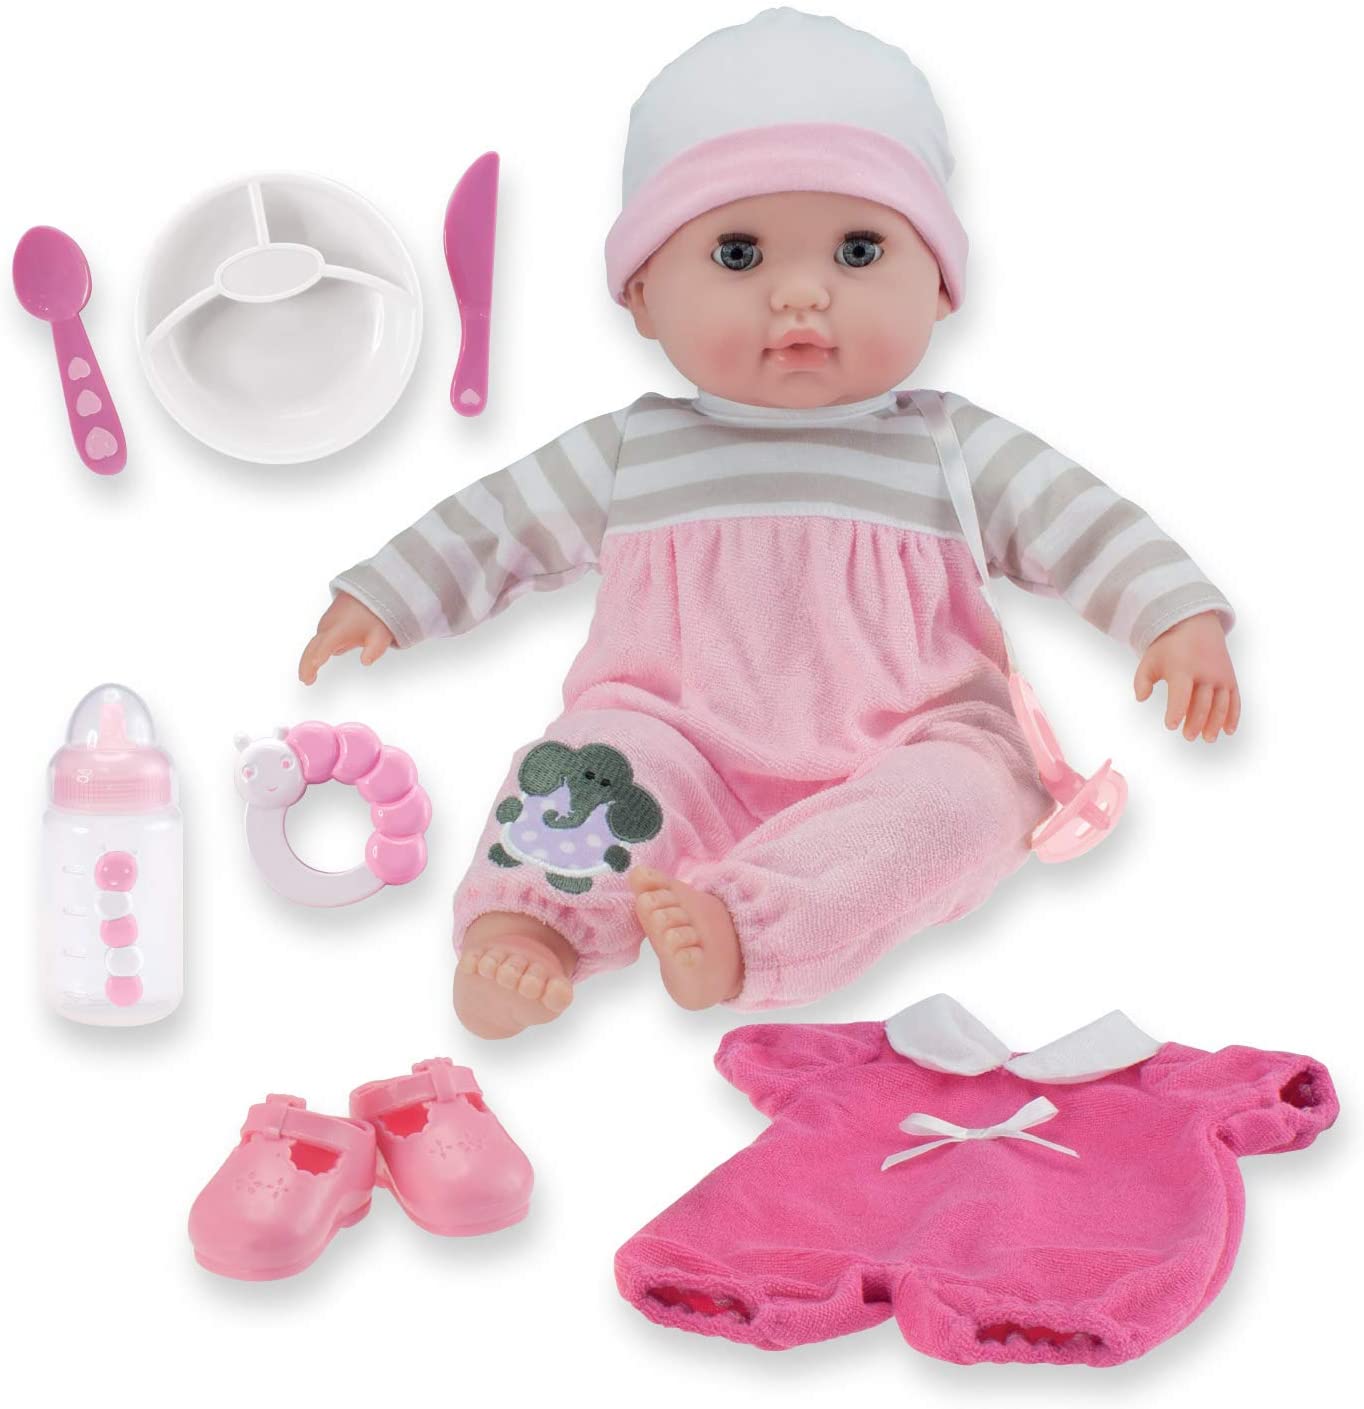 JC Toys Realistic Soft Body Baby Doll, 15-Inch